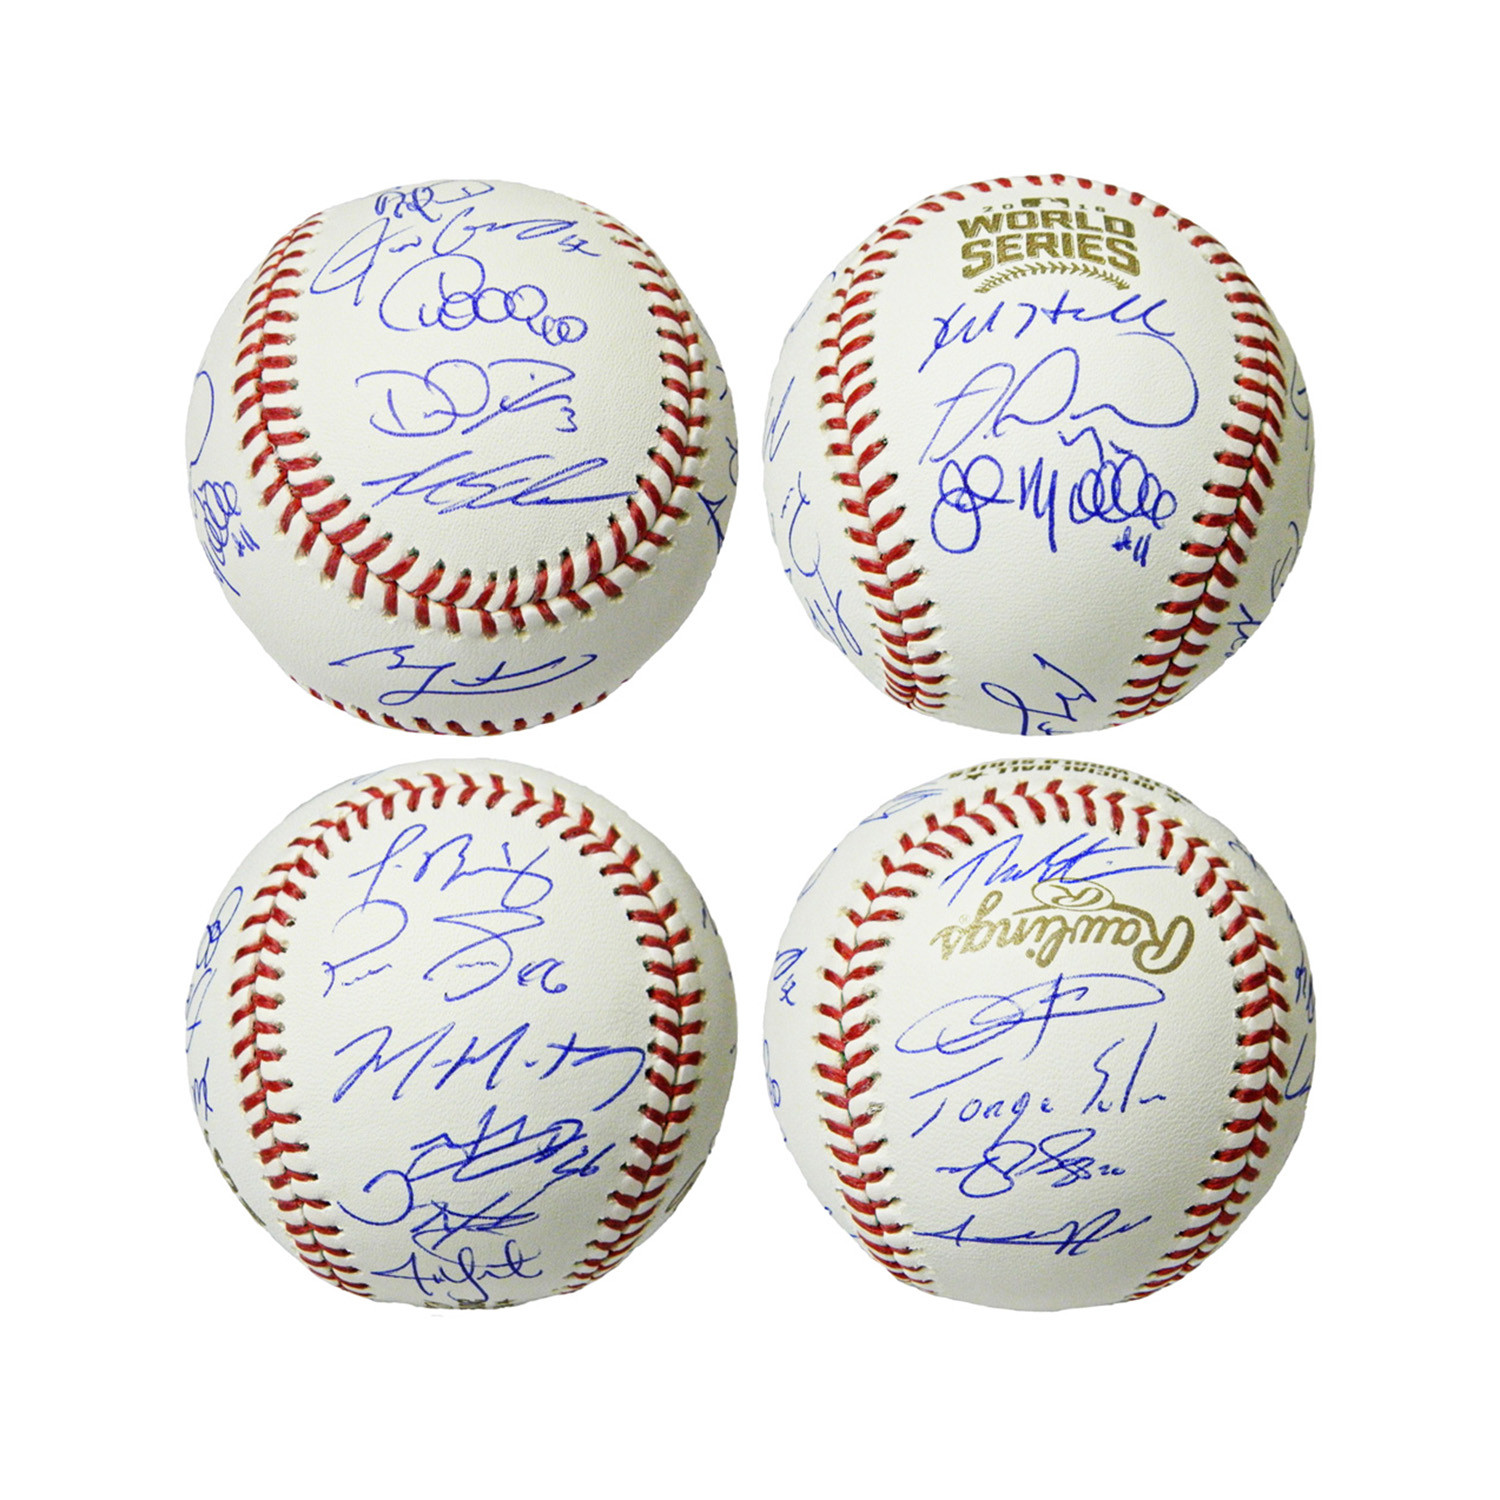 Rawlings 2016 World Series Albert Almora Jr Autographed Baseballs Autographed Baseball 